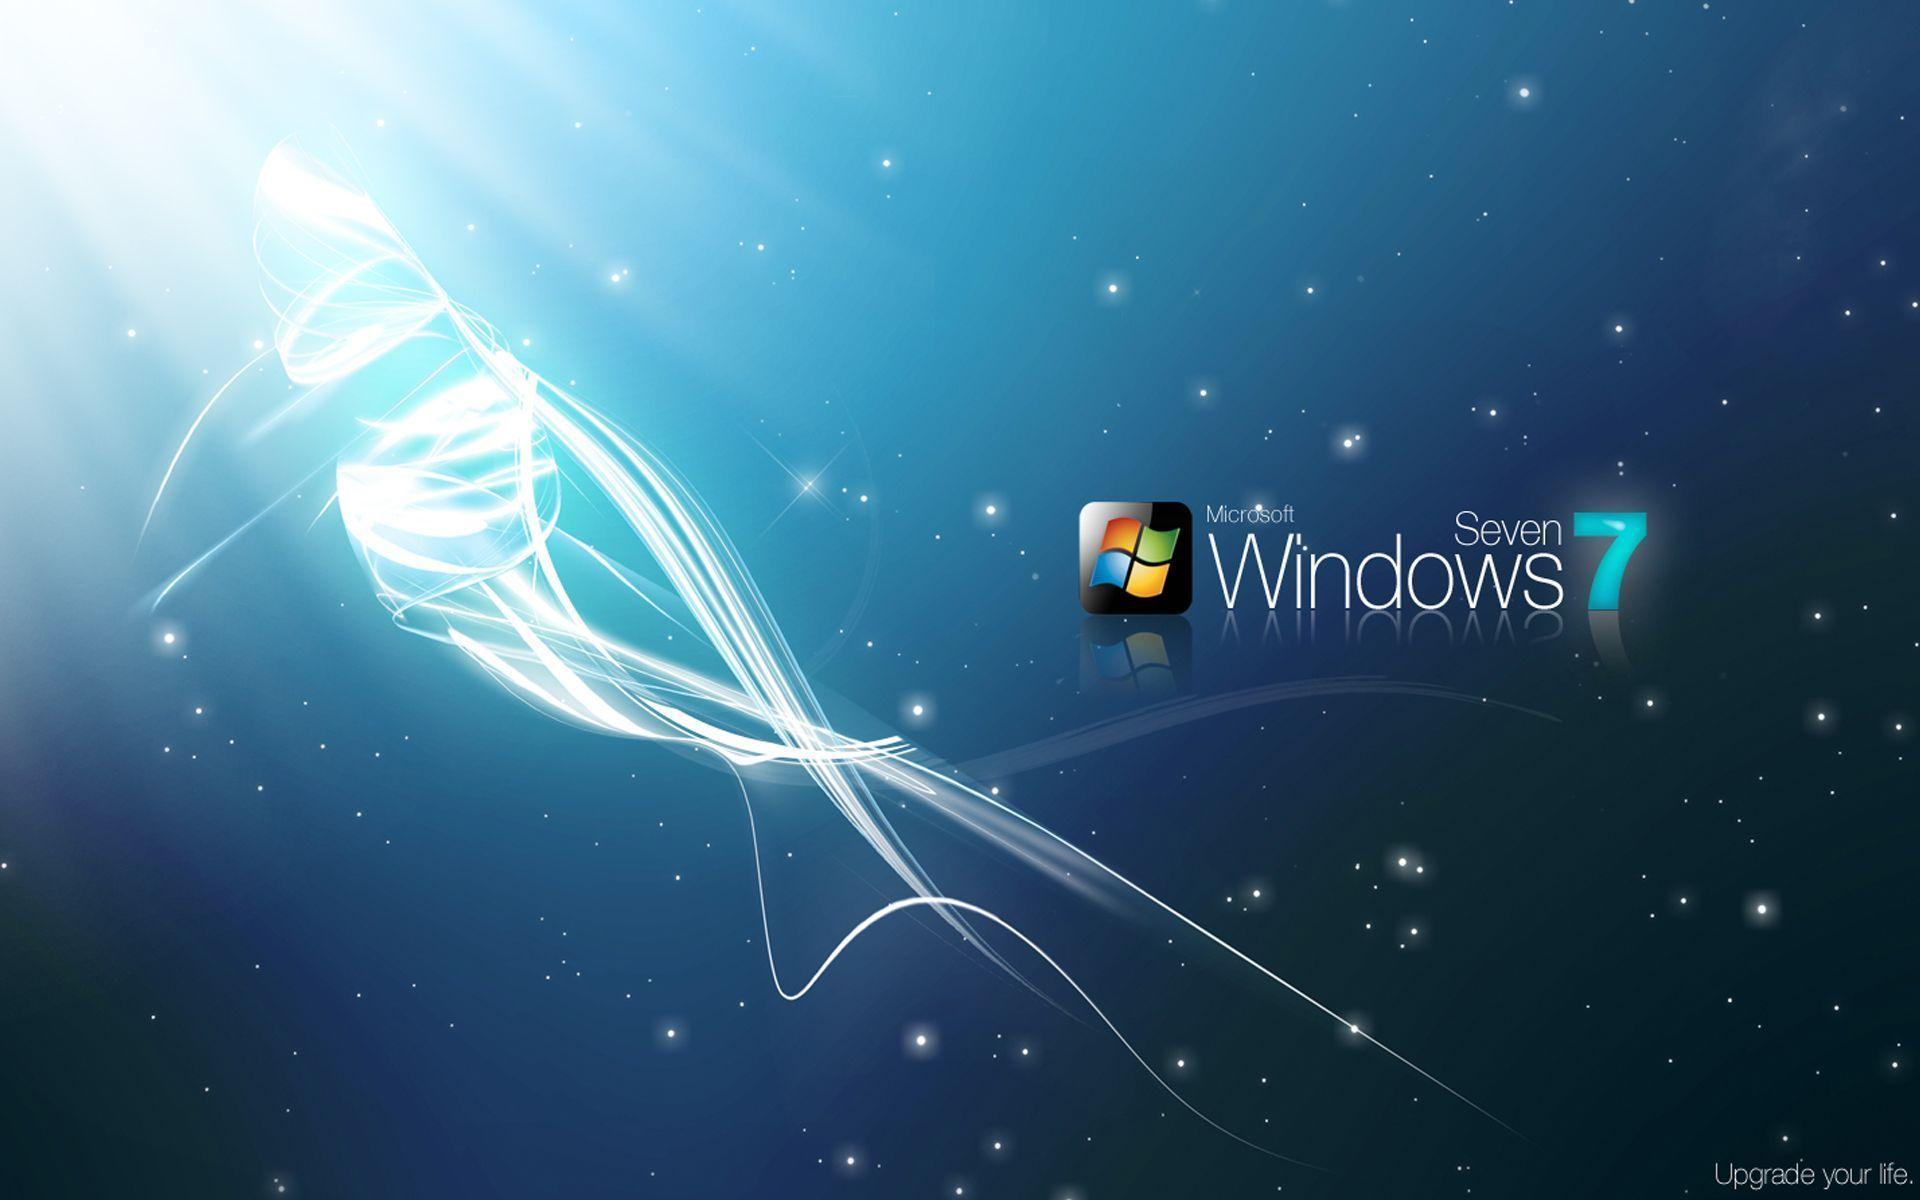 HD Wallpaper for 2015 Windows 7 Ultimate 1920x1080p